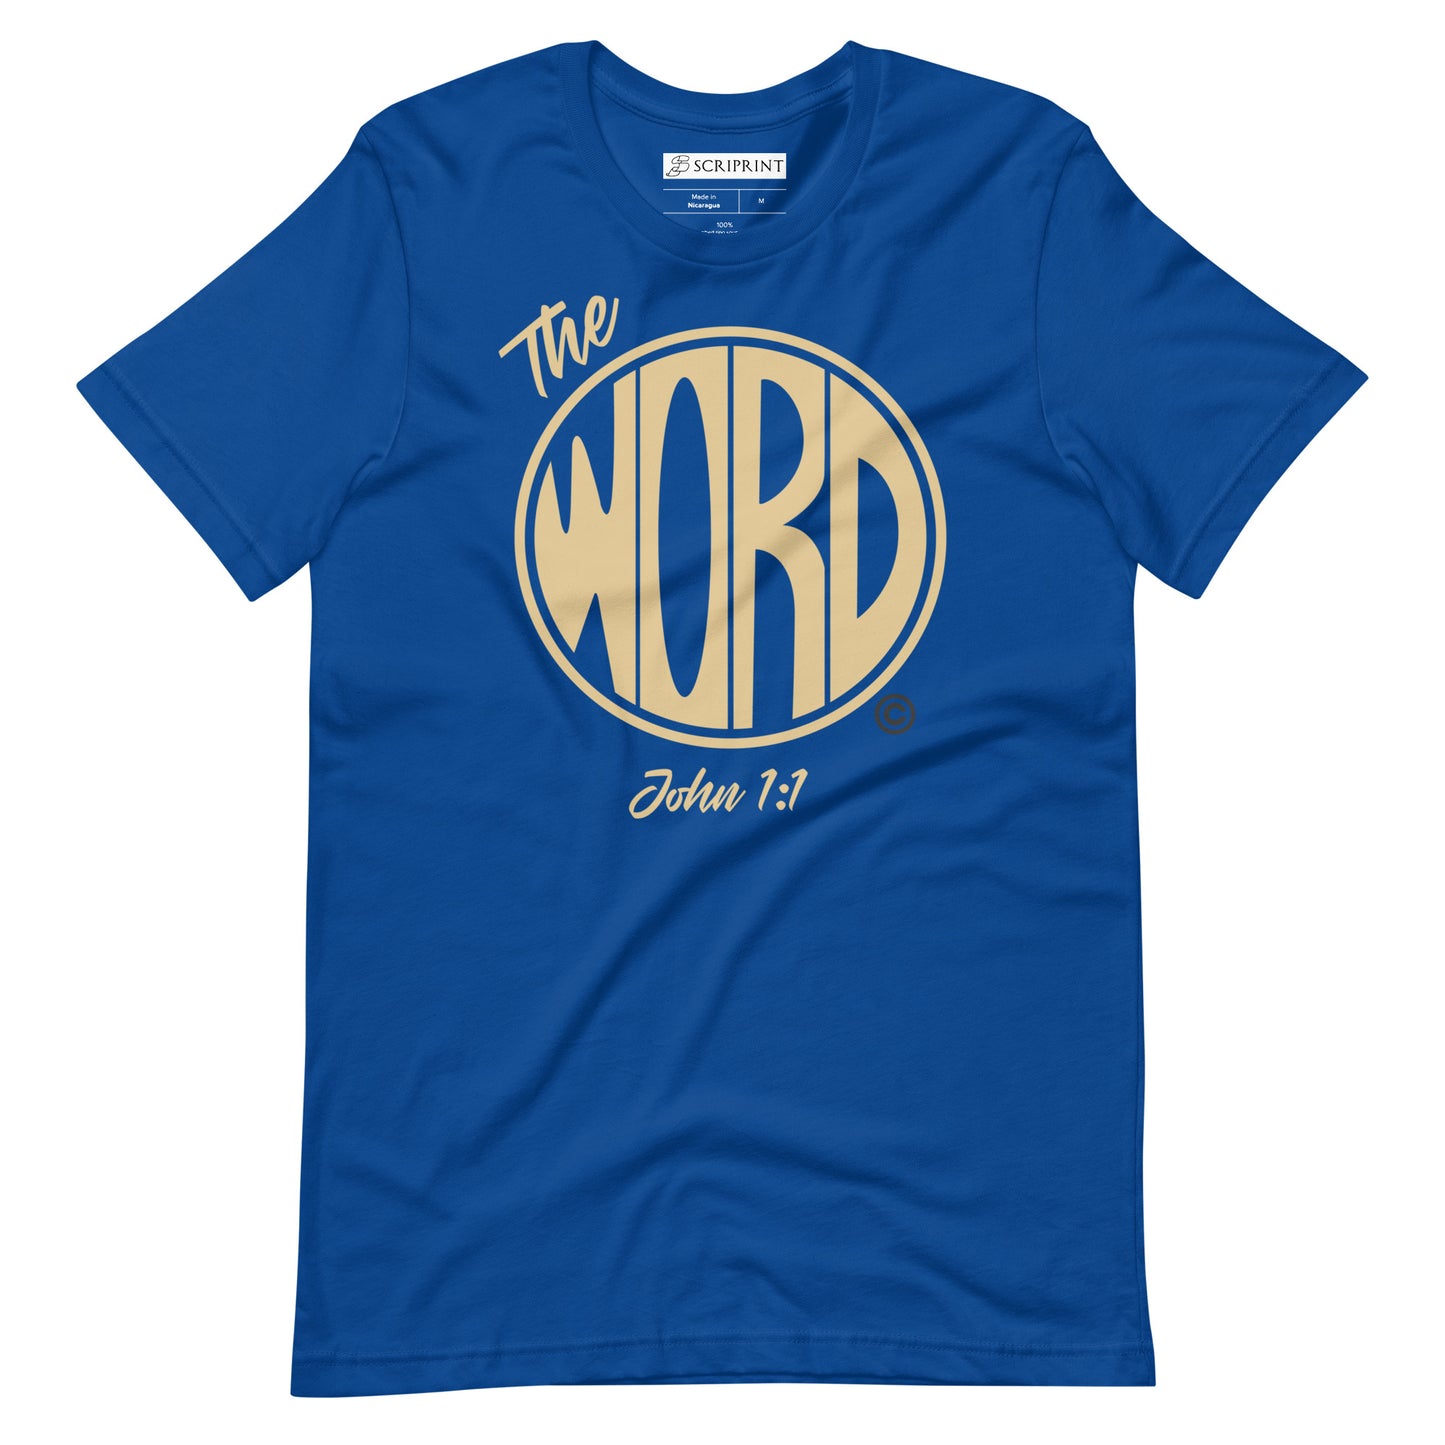 The Word Men's T-Shirt